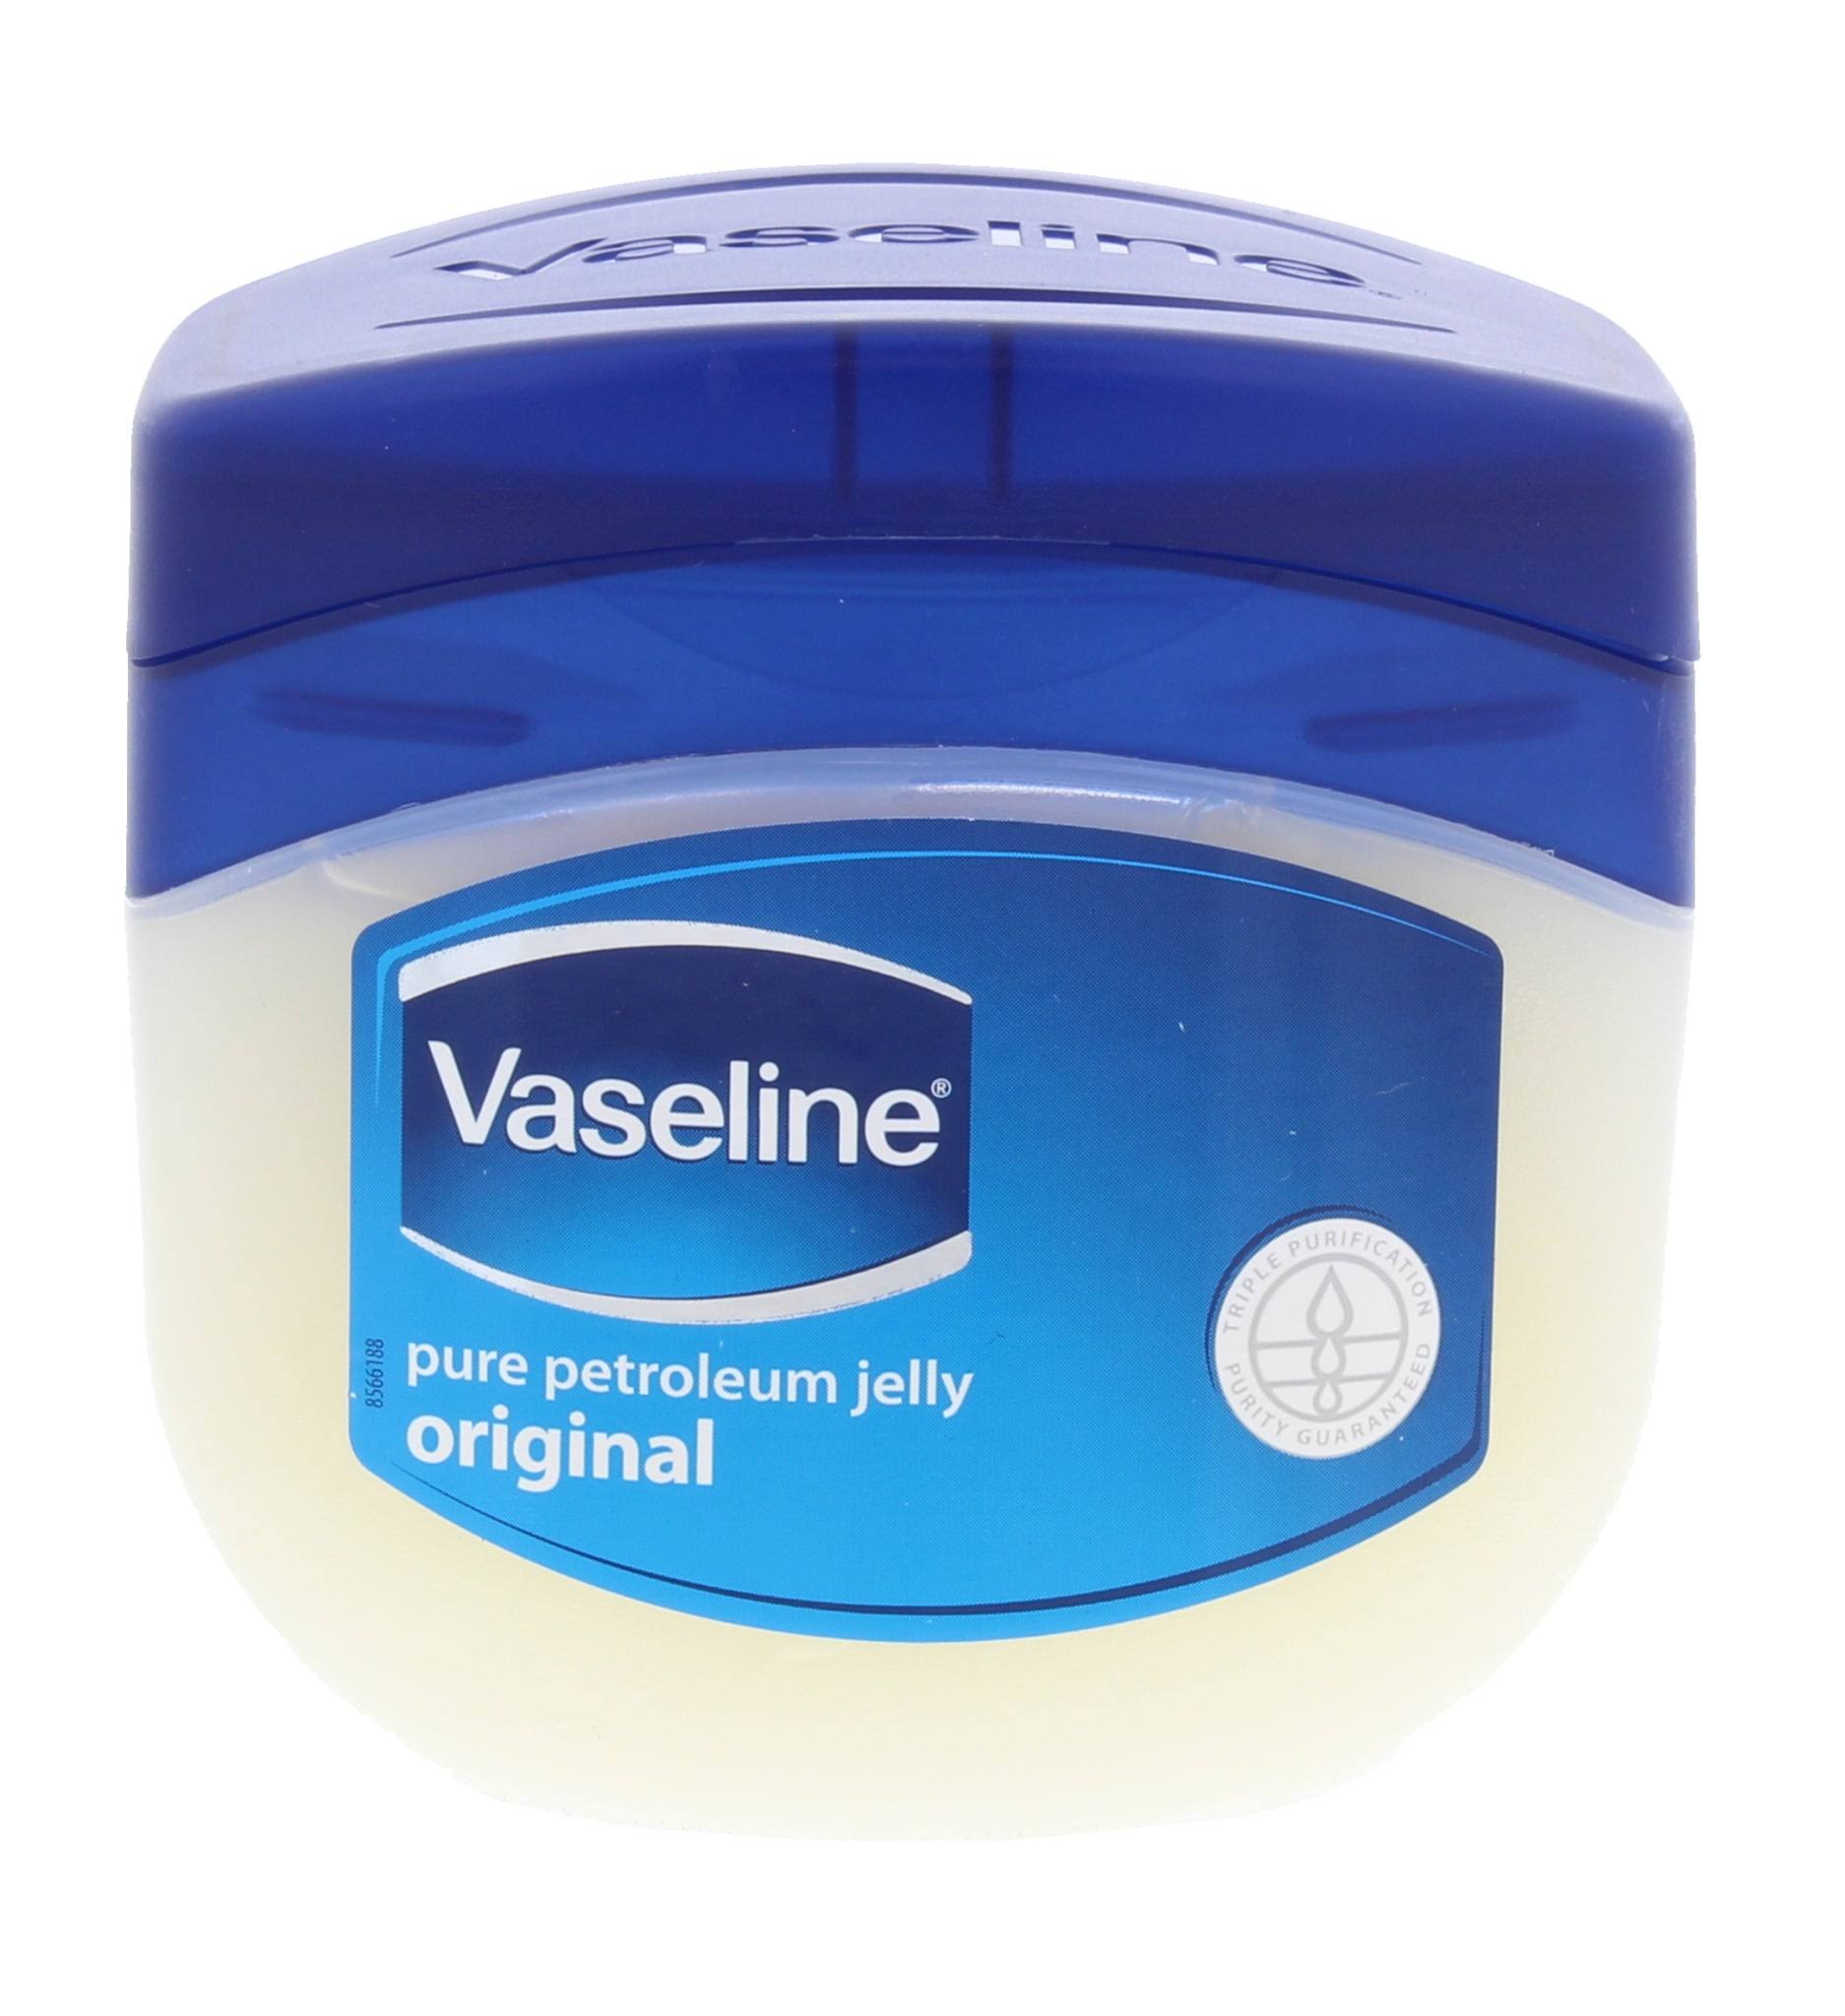 Vaseline Pure Petroleum Jelly - Original, 250ml